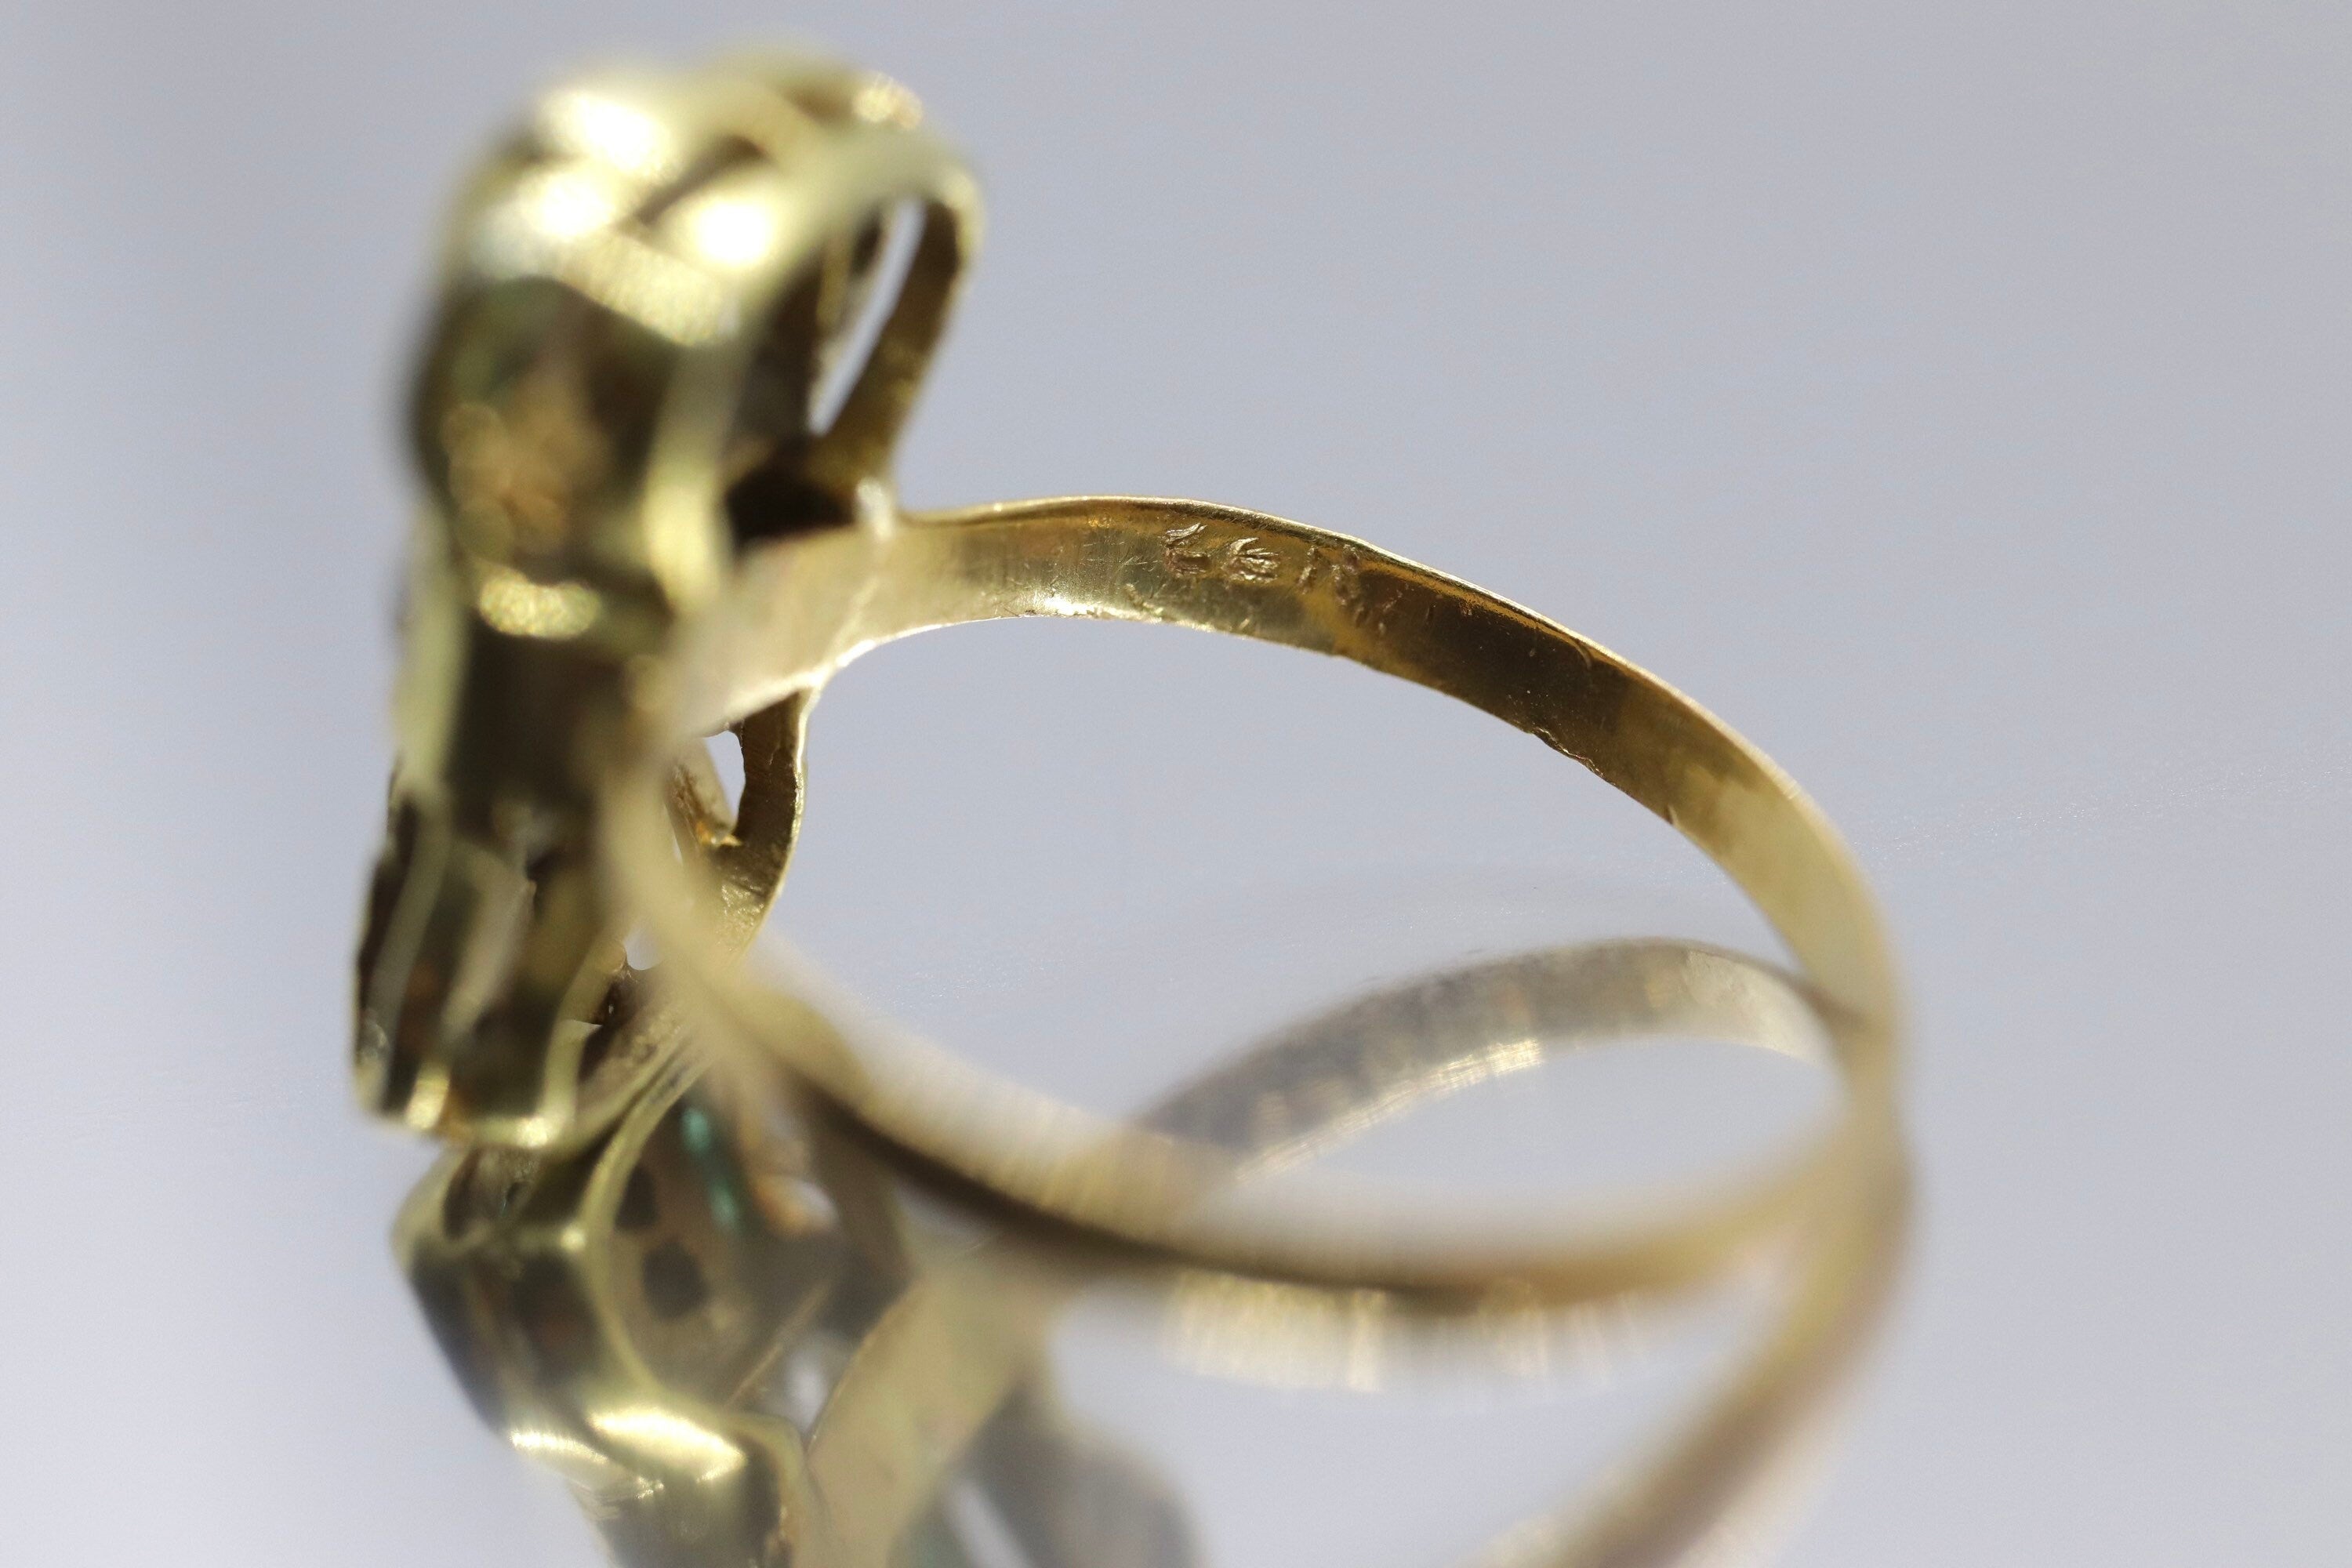 22k/10k Diamond Emerald Bow Tie Ring.